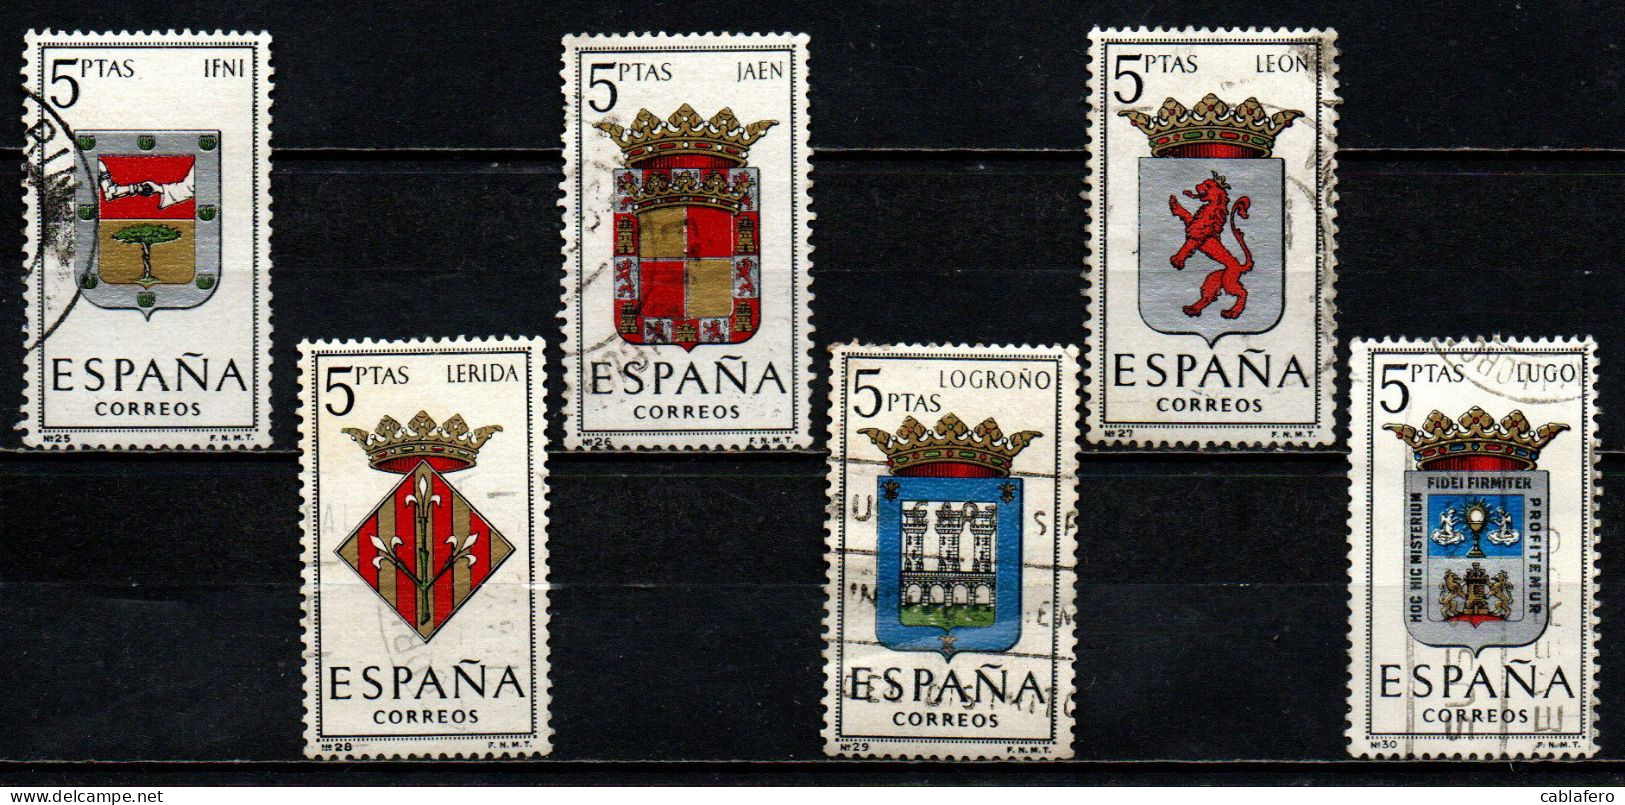 SPAGNA - 1964 - STEMMI DELLE PROVINCE SPAGNOLE: IFNI, JAEN, LEON, LERIDA, LOGRONO, LUGO - USATI - Used Stamps